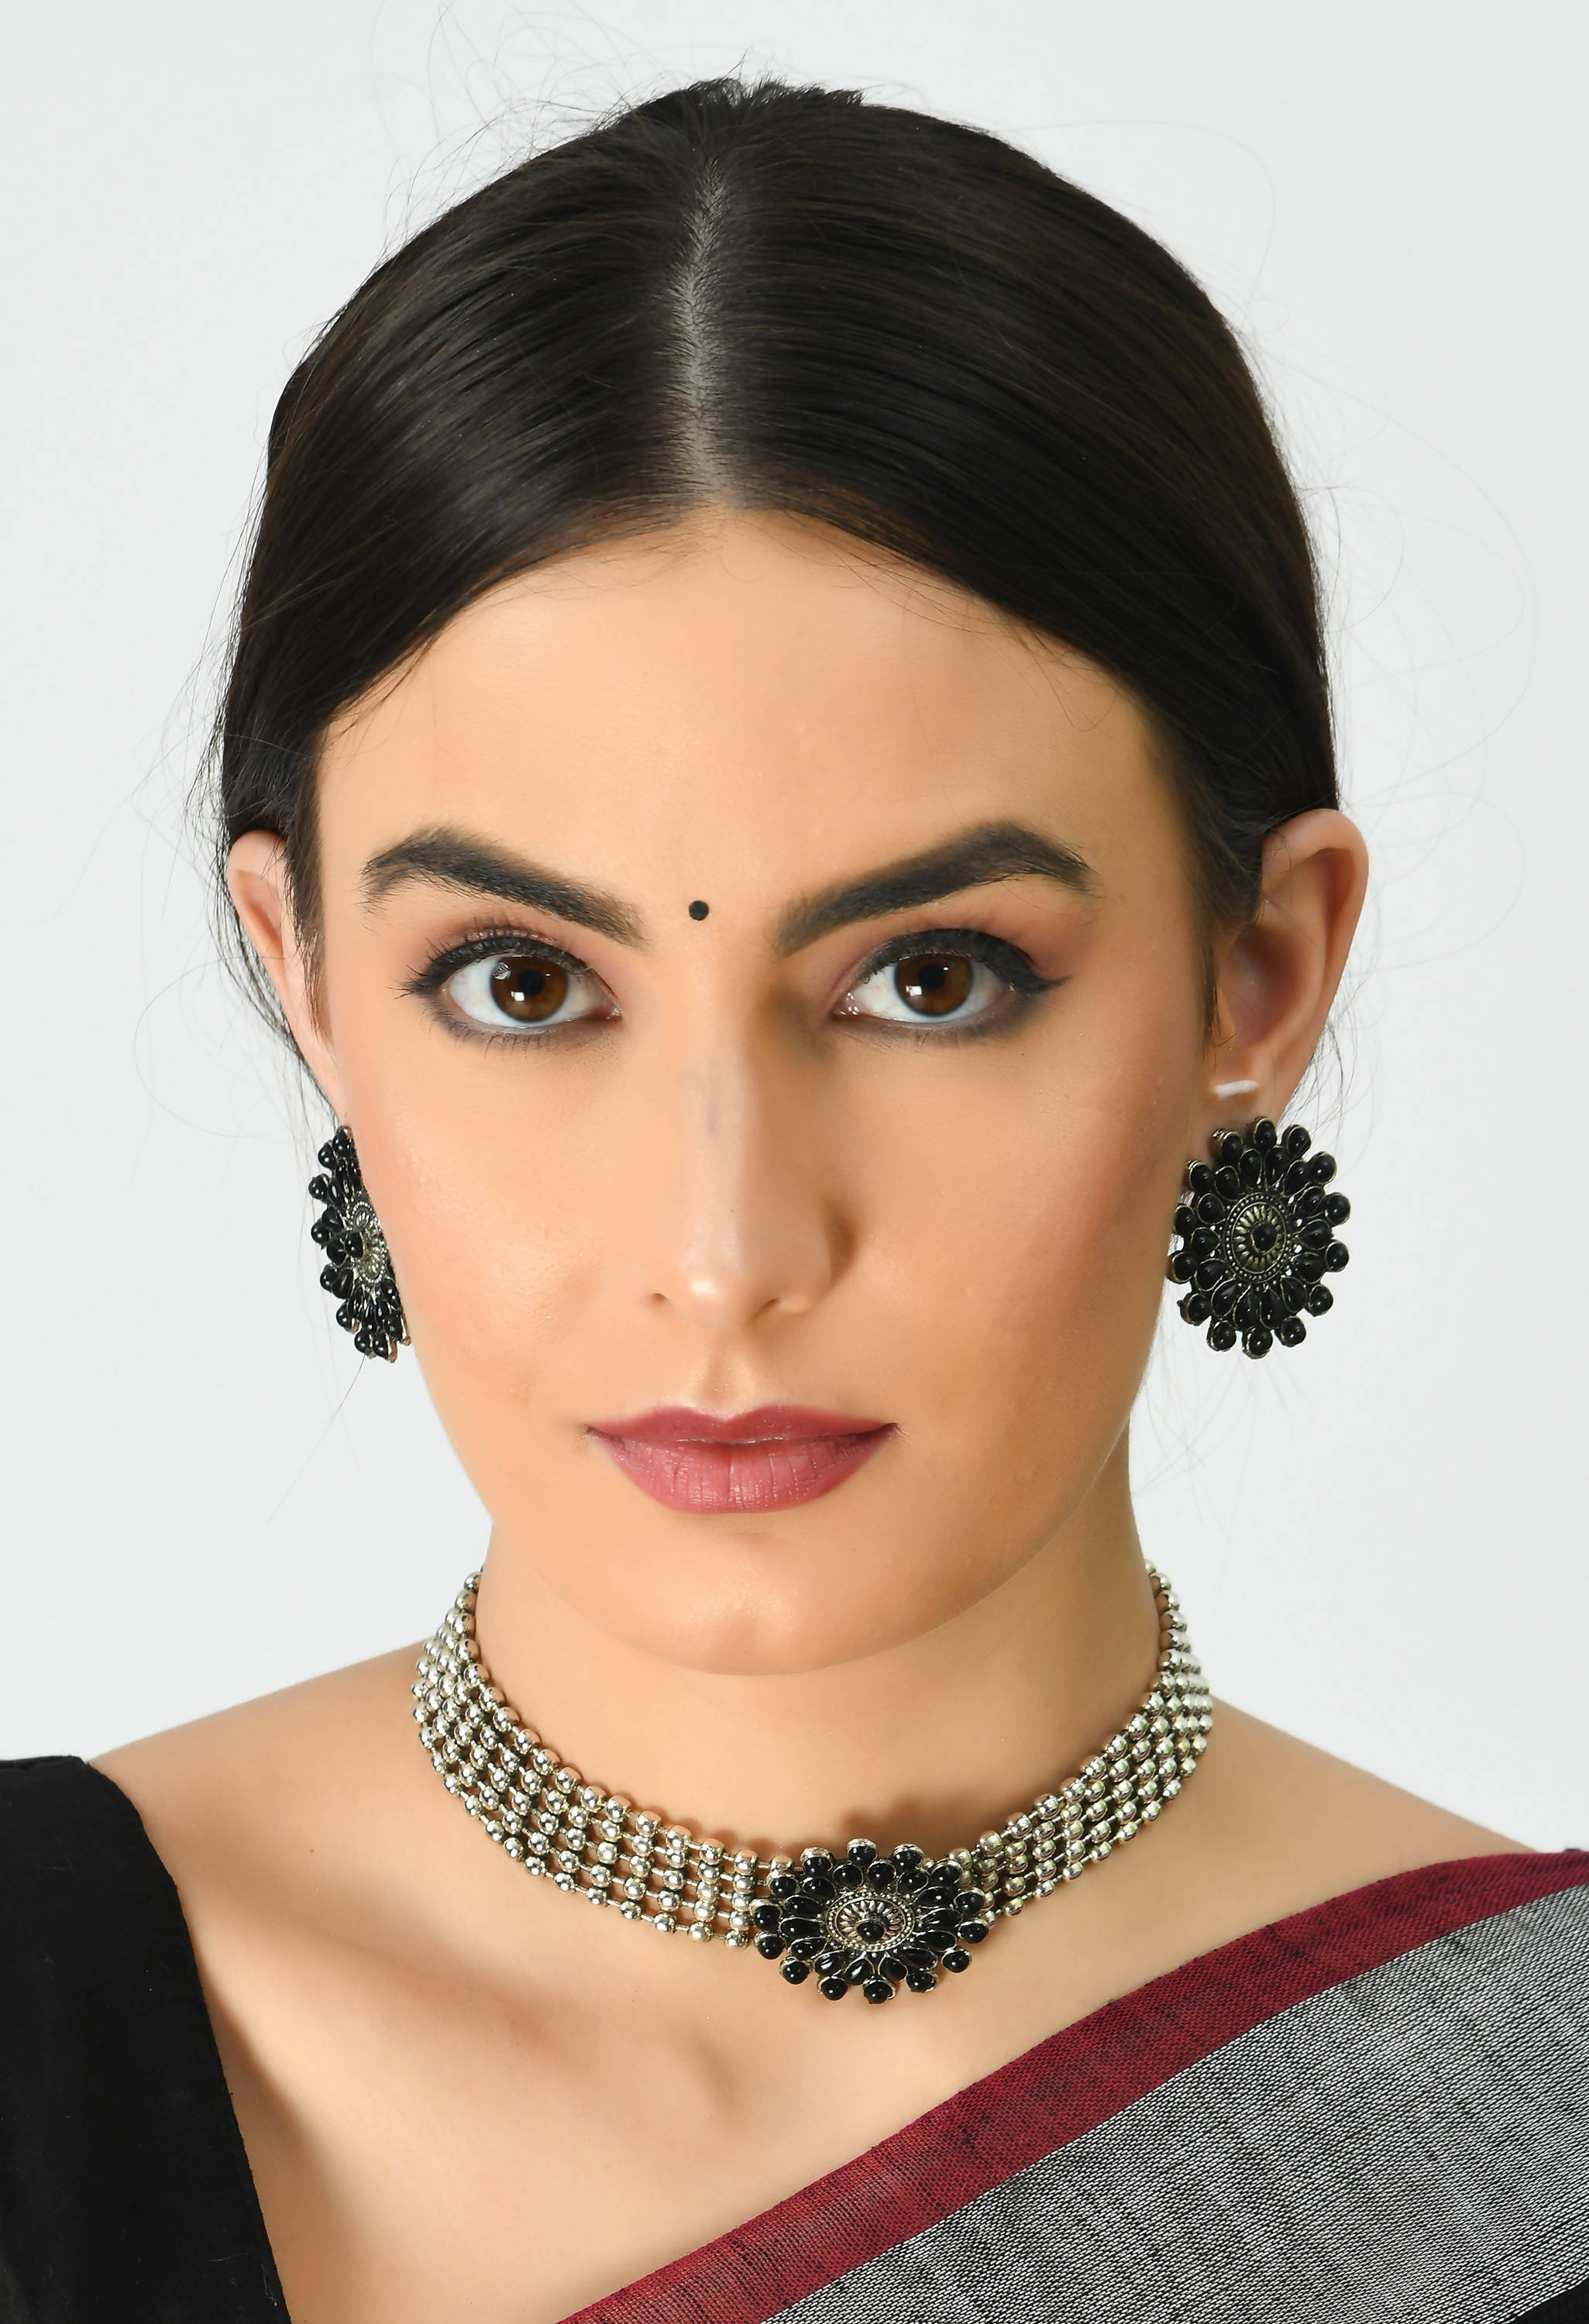 Johar Kamal Oxidised Silver-Plated Black Color Chokar Necklace with Earrings Jkms_137